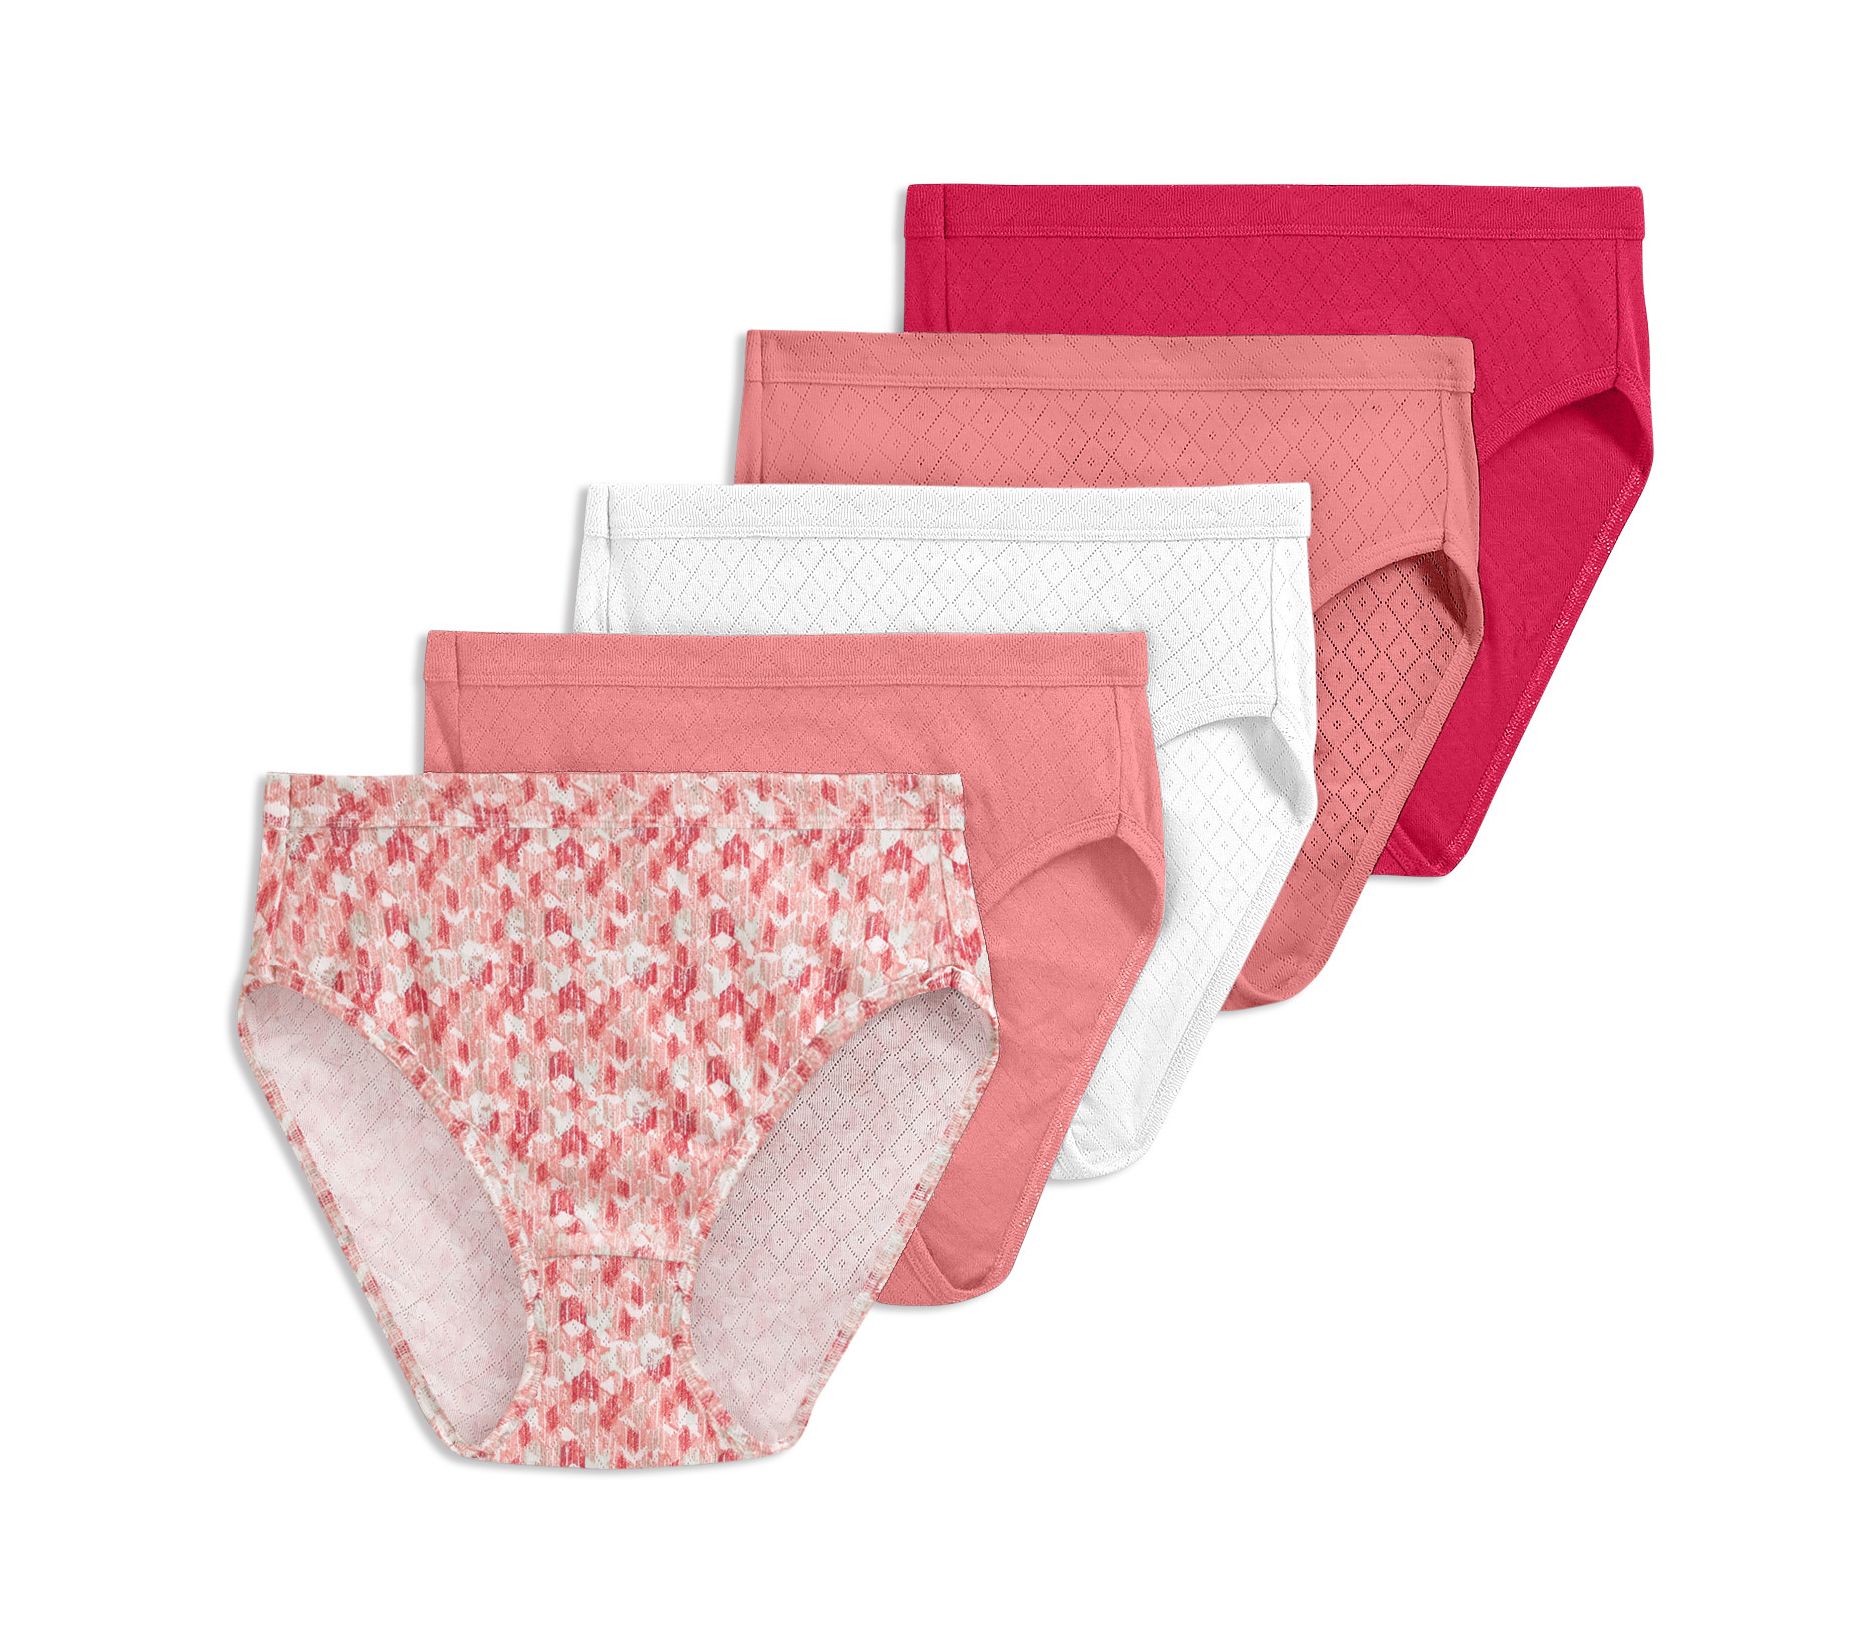 Jockey - Women's Underwear Size 6 - Intimates 